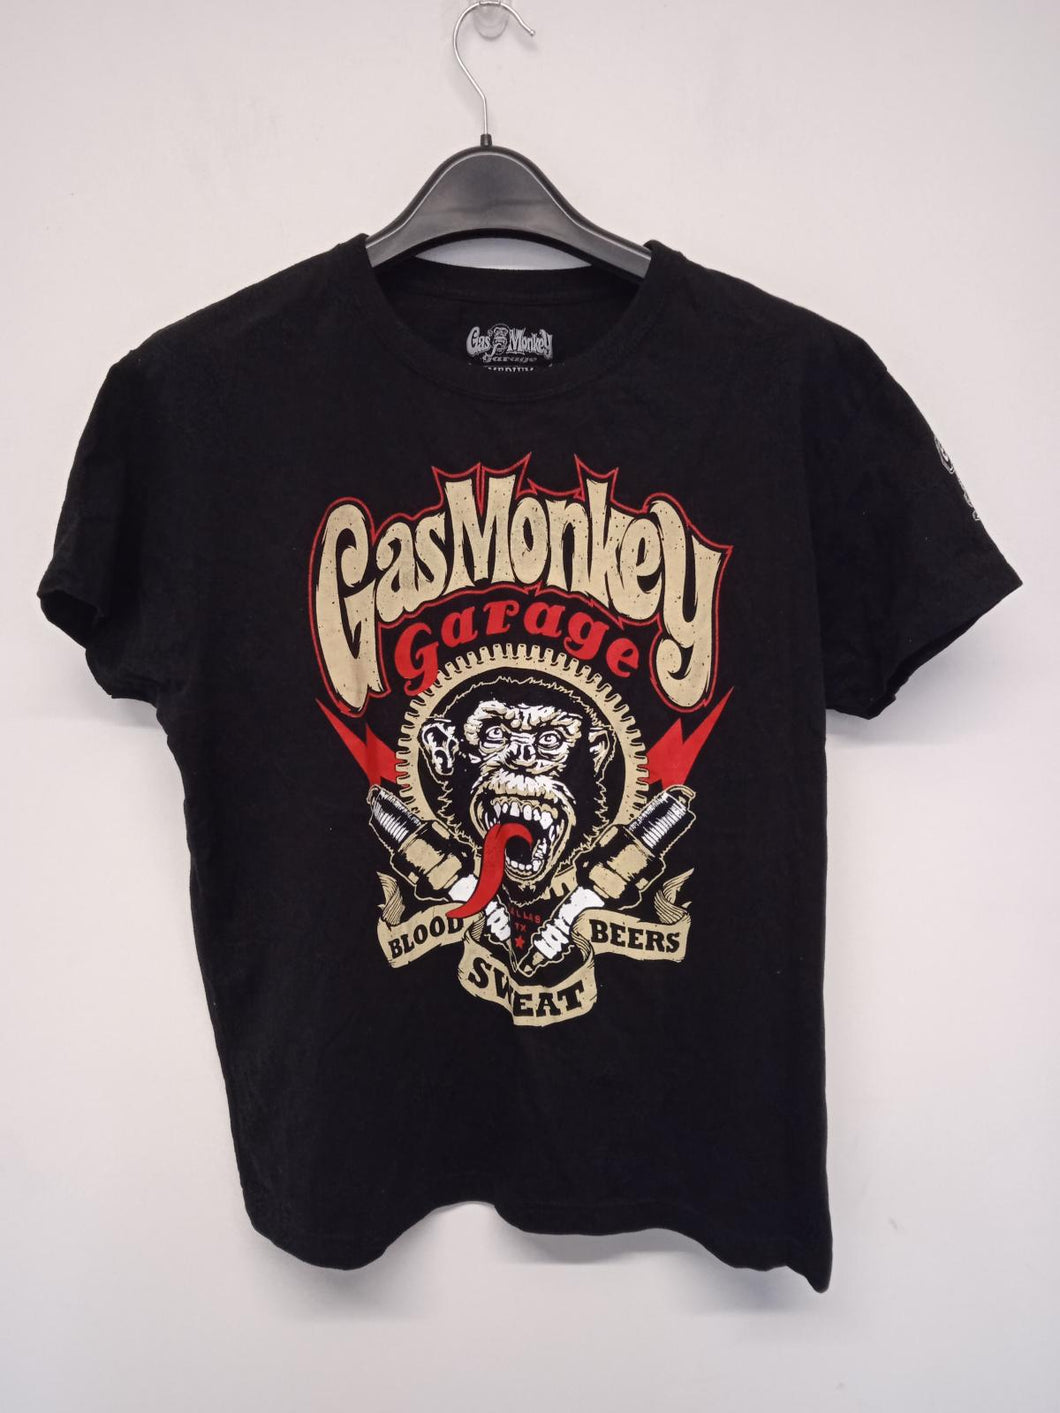 GAS MONKEY Men's Black Cotton Short Sleeve Blood Sweat & Beers T-Shirt Size M